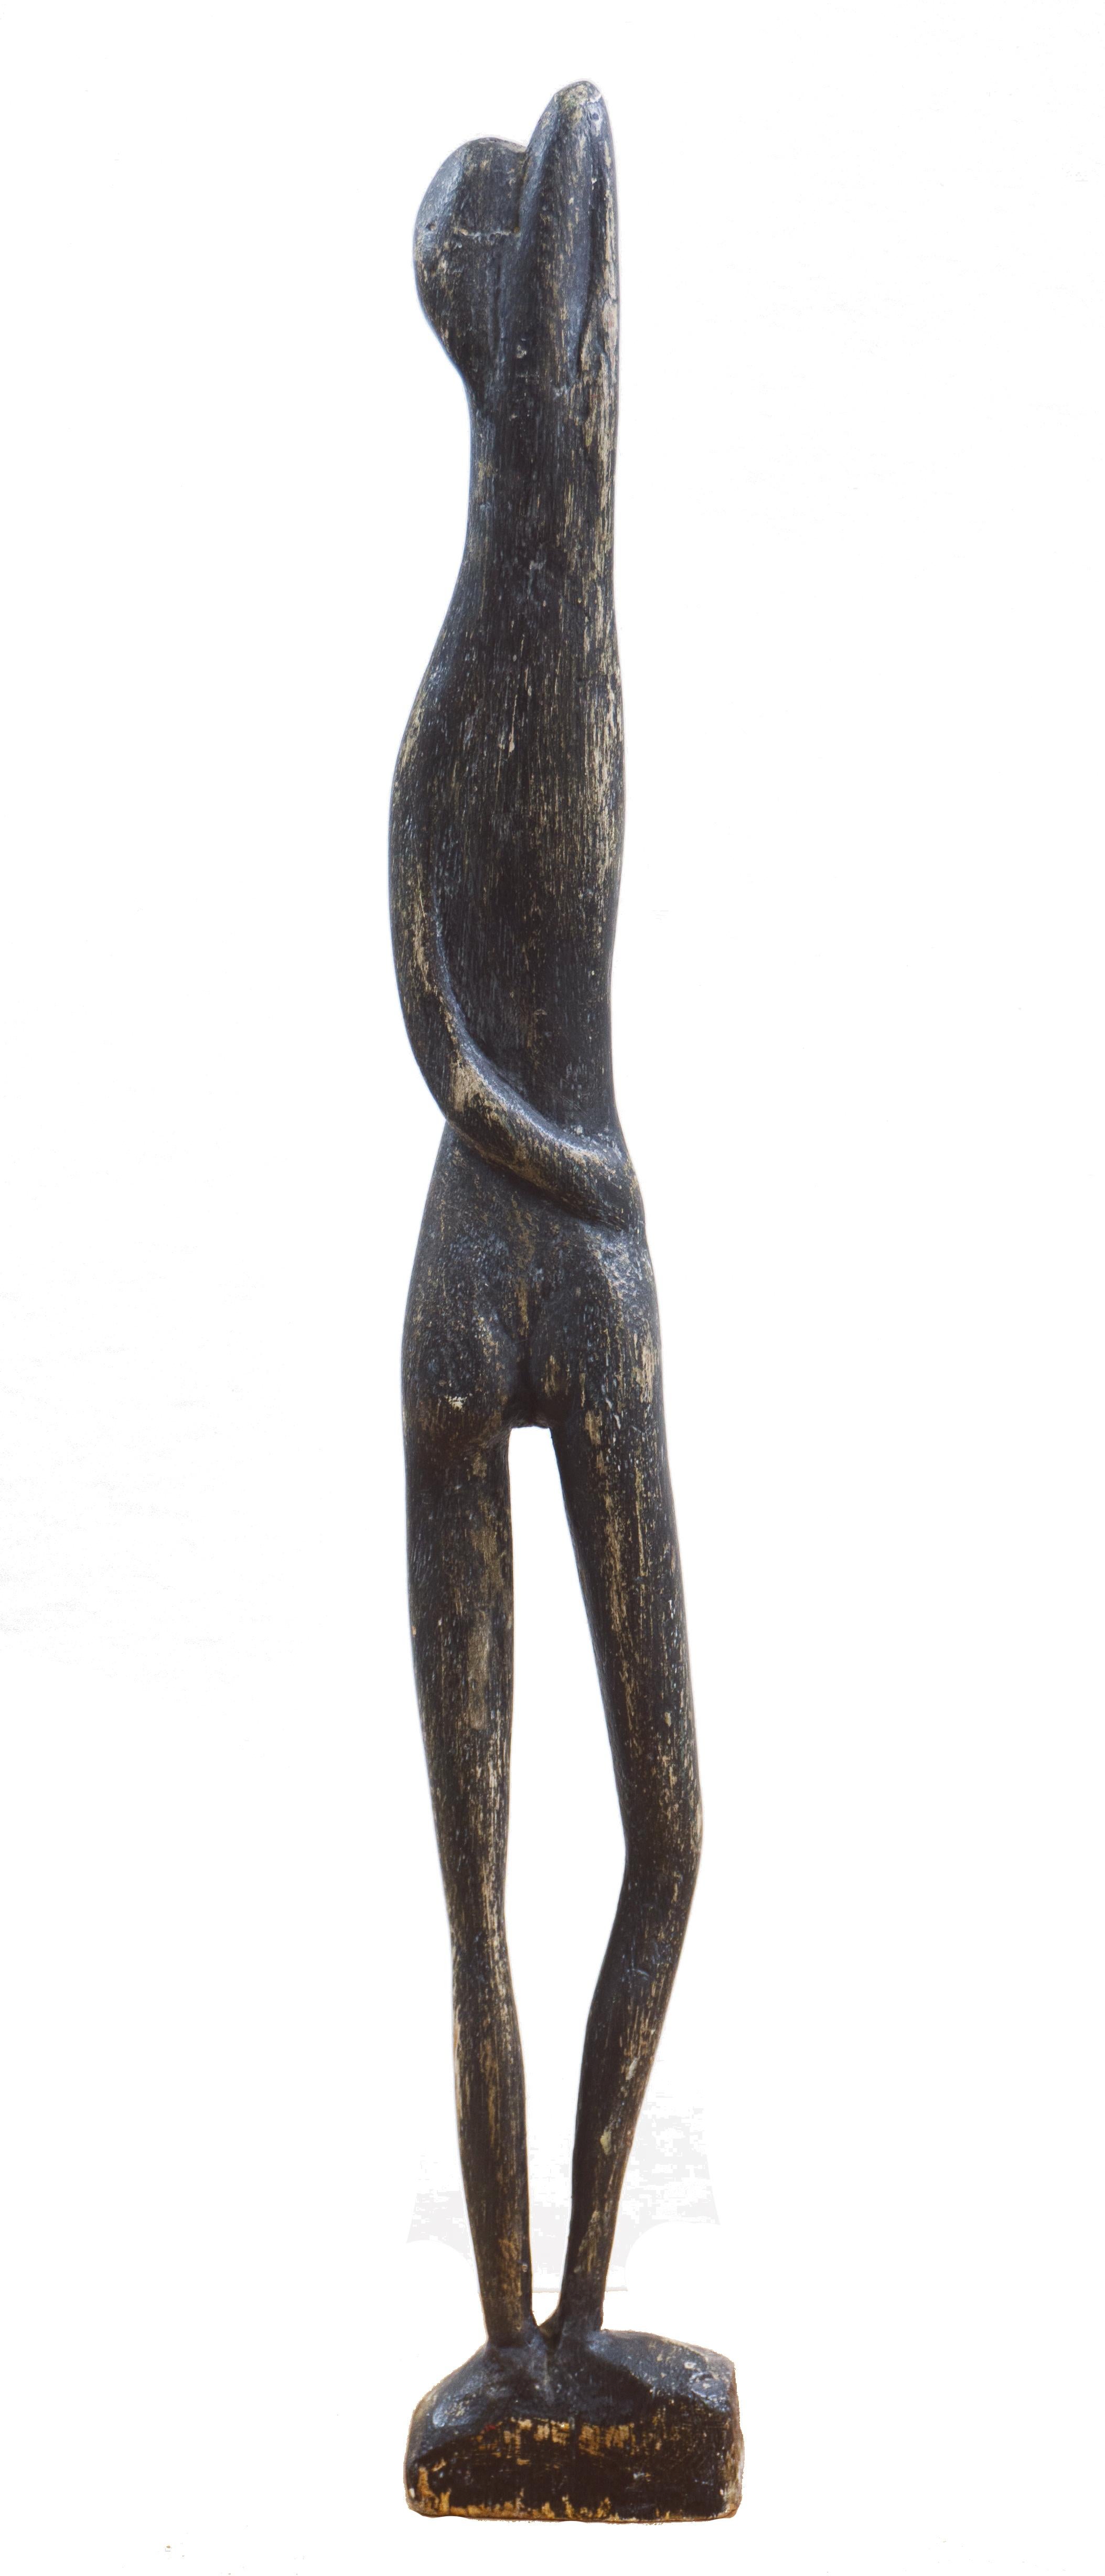  „Woman Standing“, modernistische Skulptur, San Francisco Bay Area, de Young Museum (Moderne), Sculpture, von Wedo Georgetti